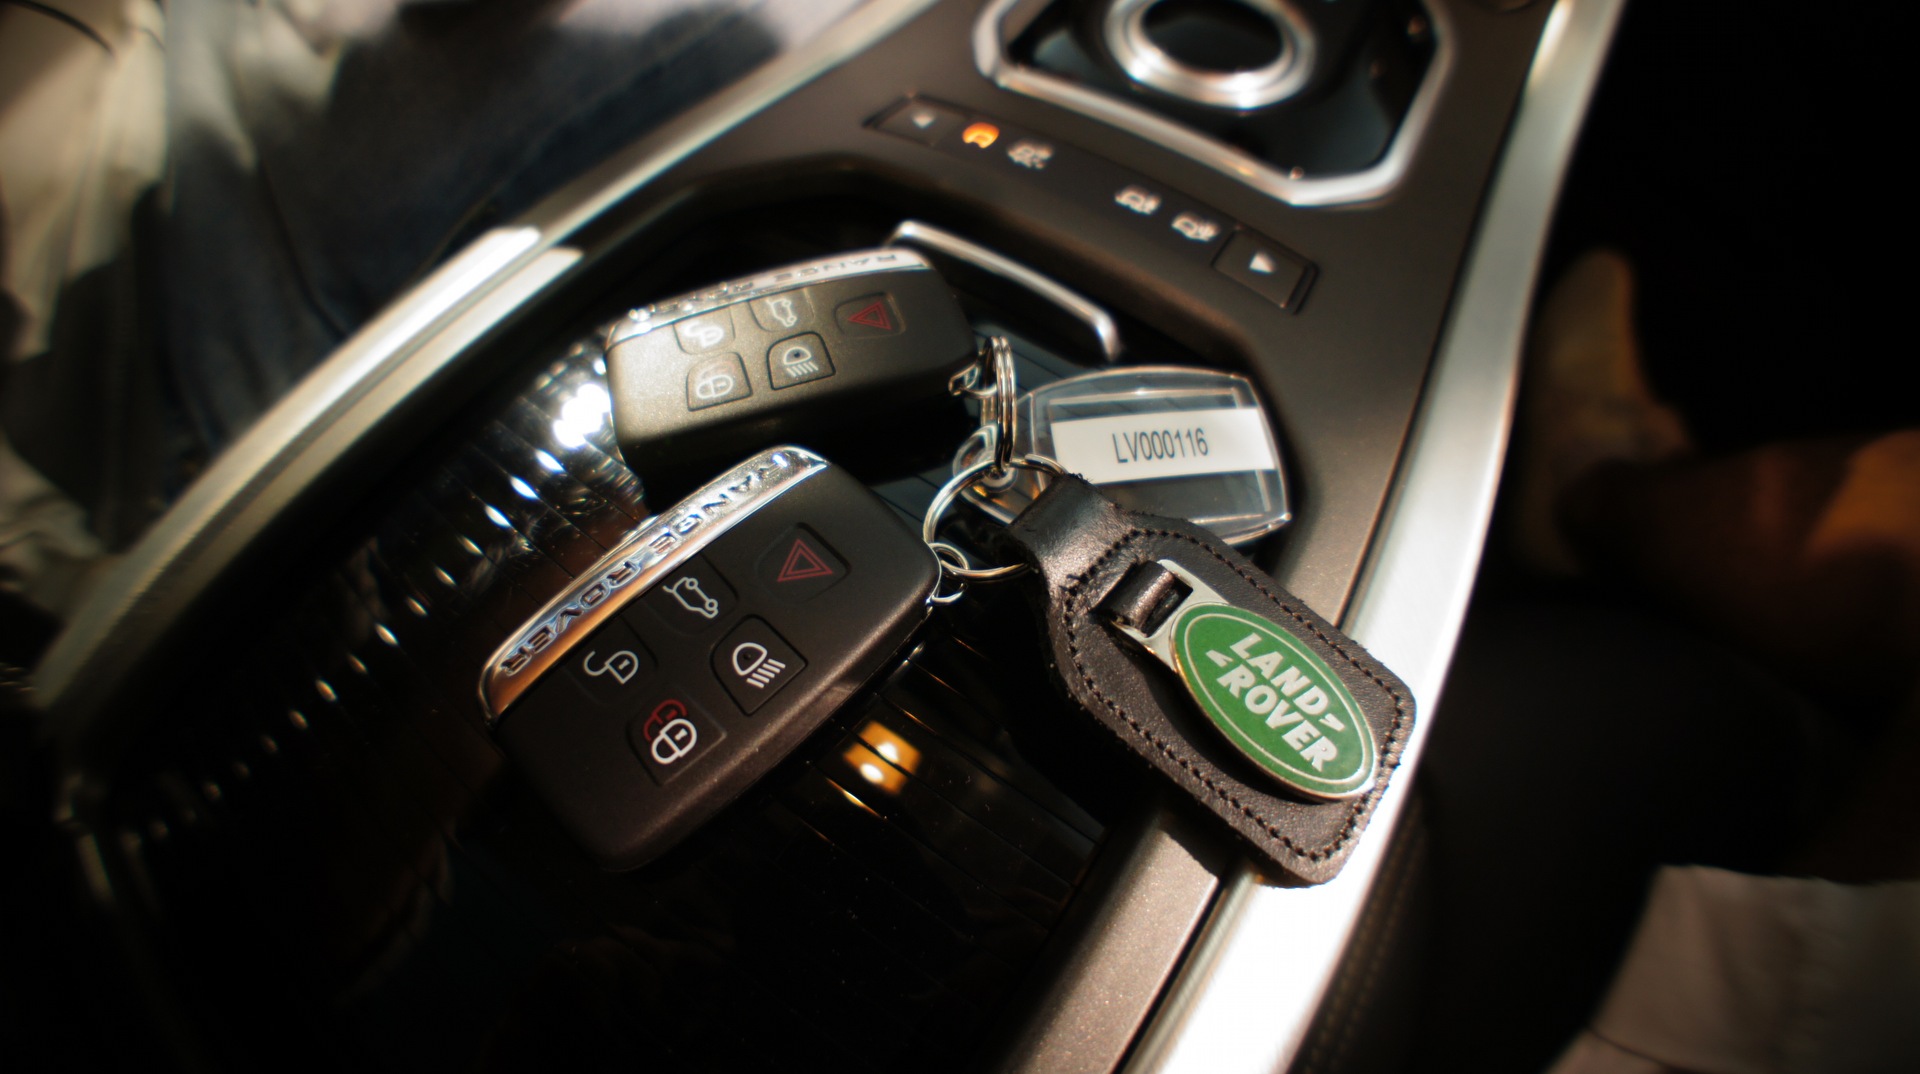 Ключи Land Rover